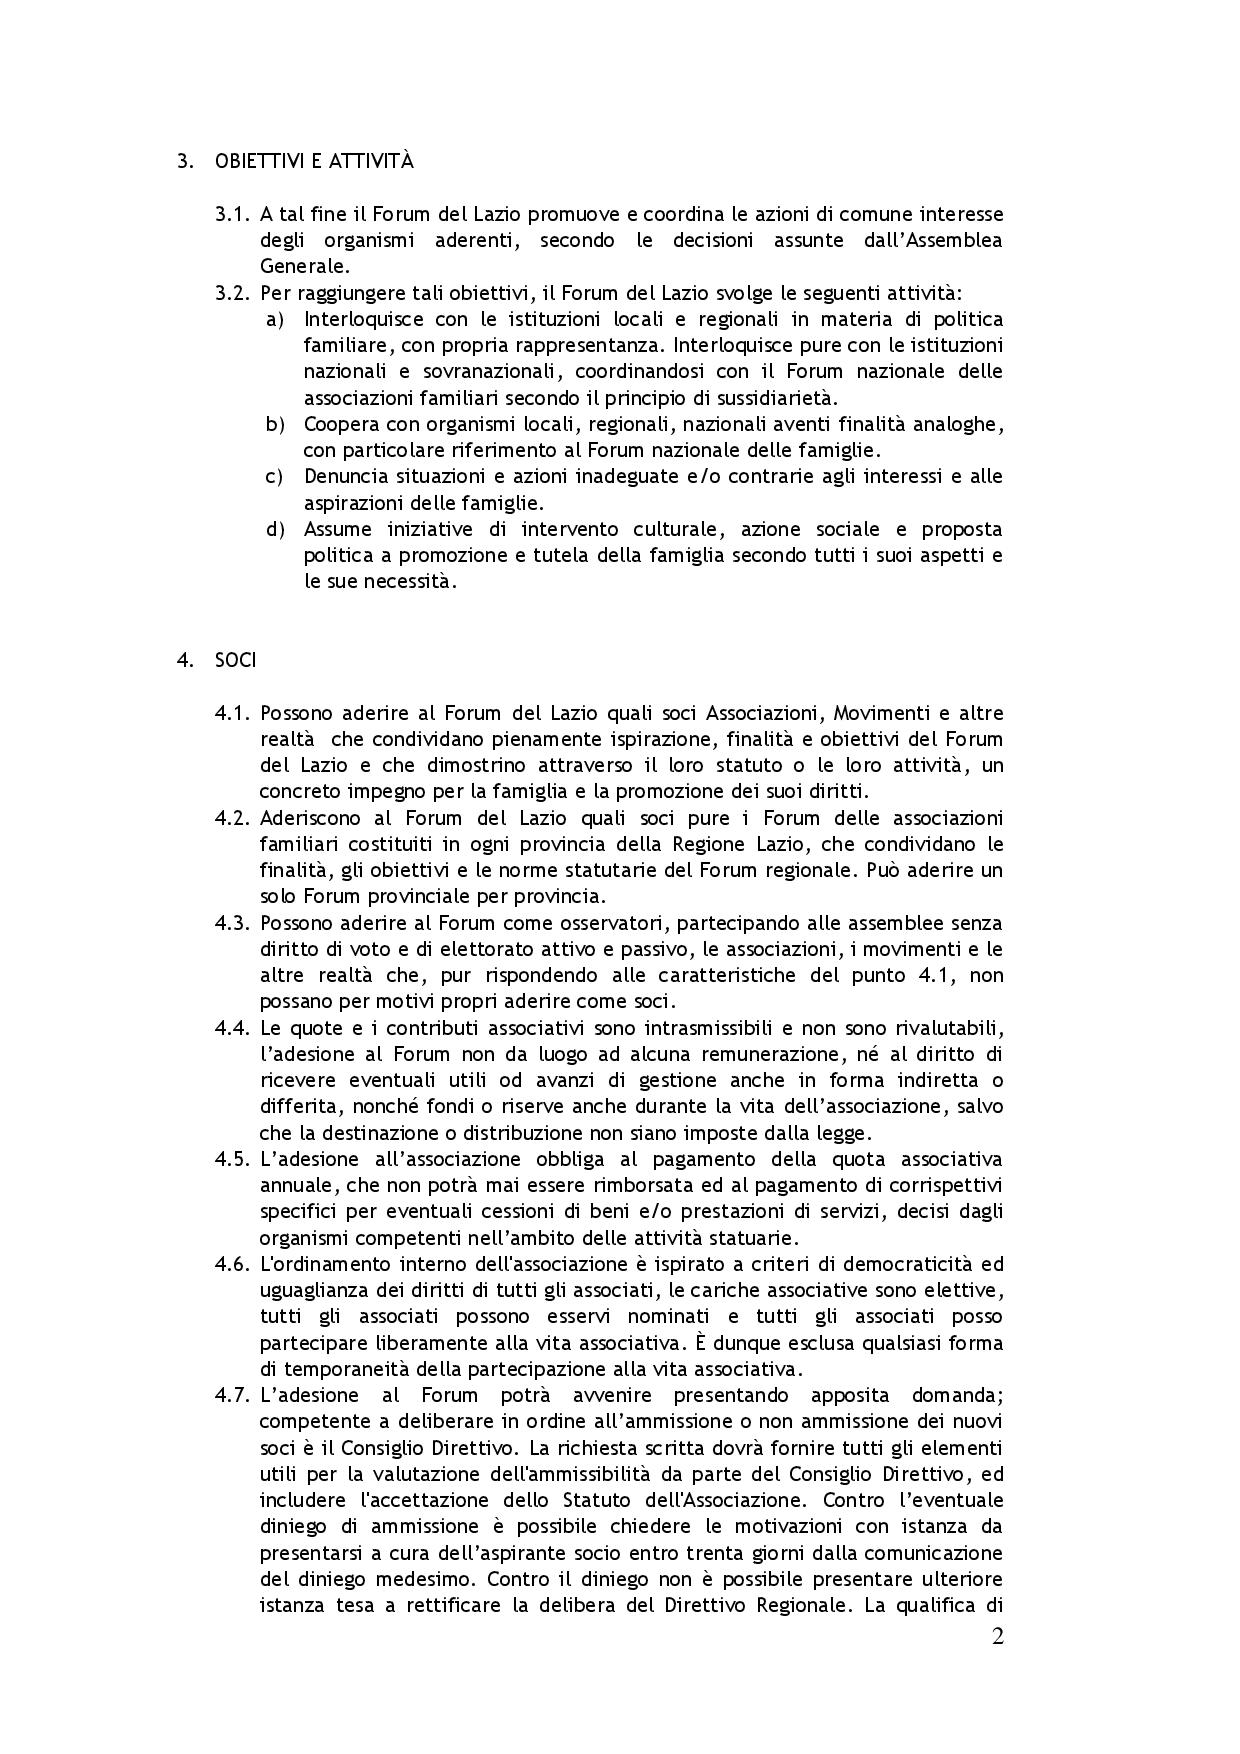 statuto-2014-def-page-002